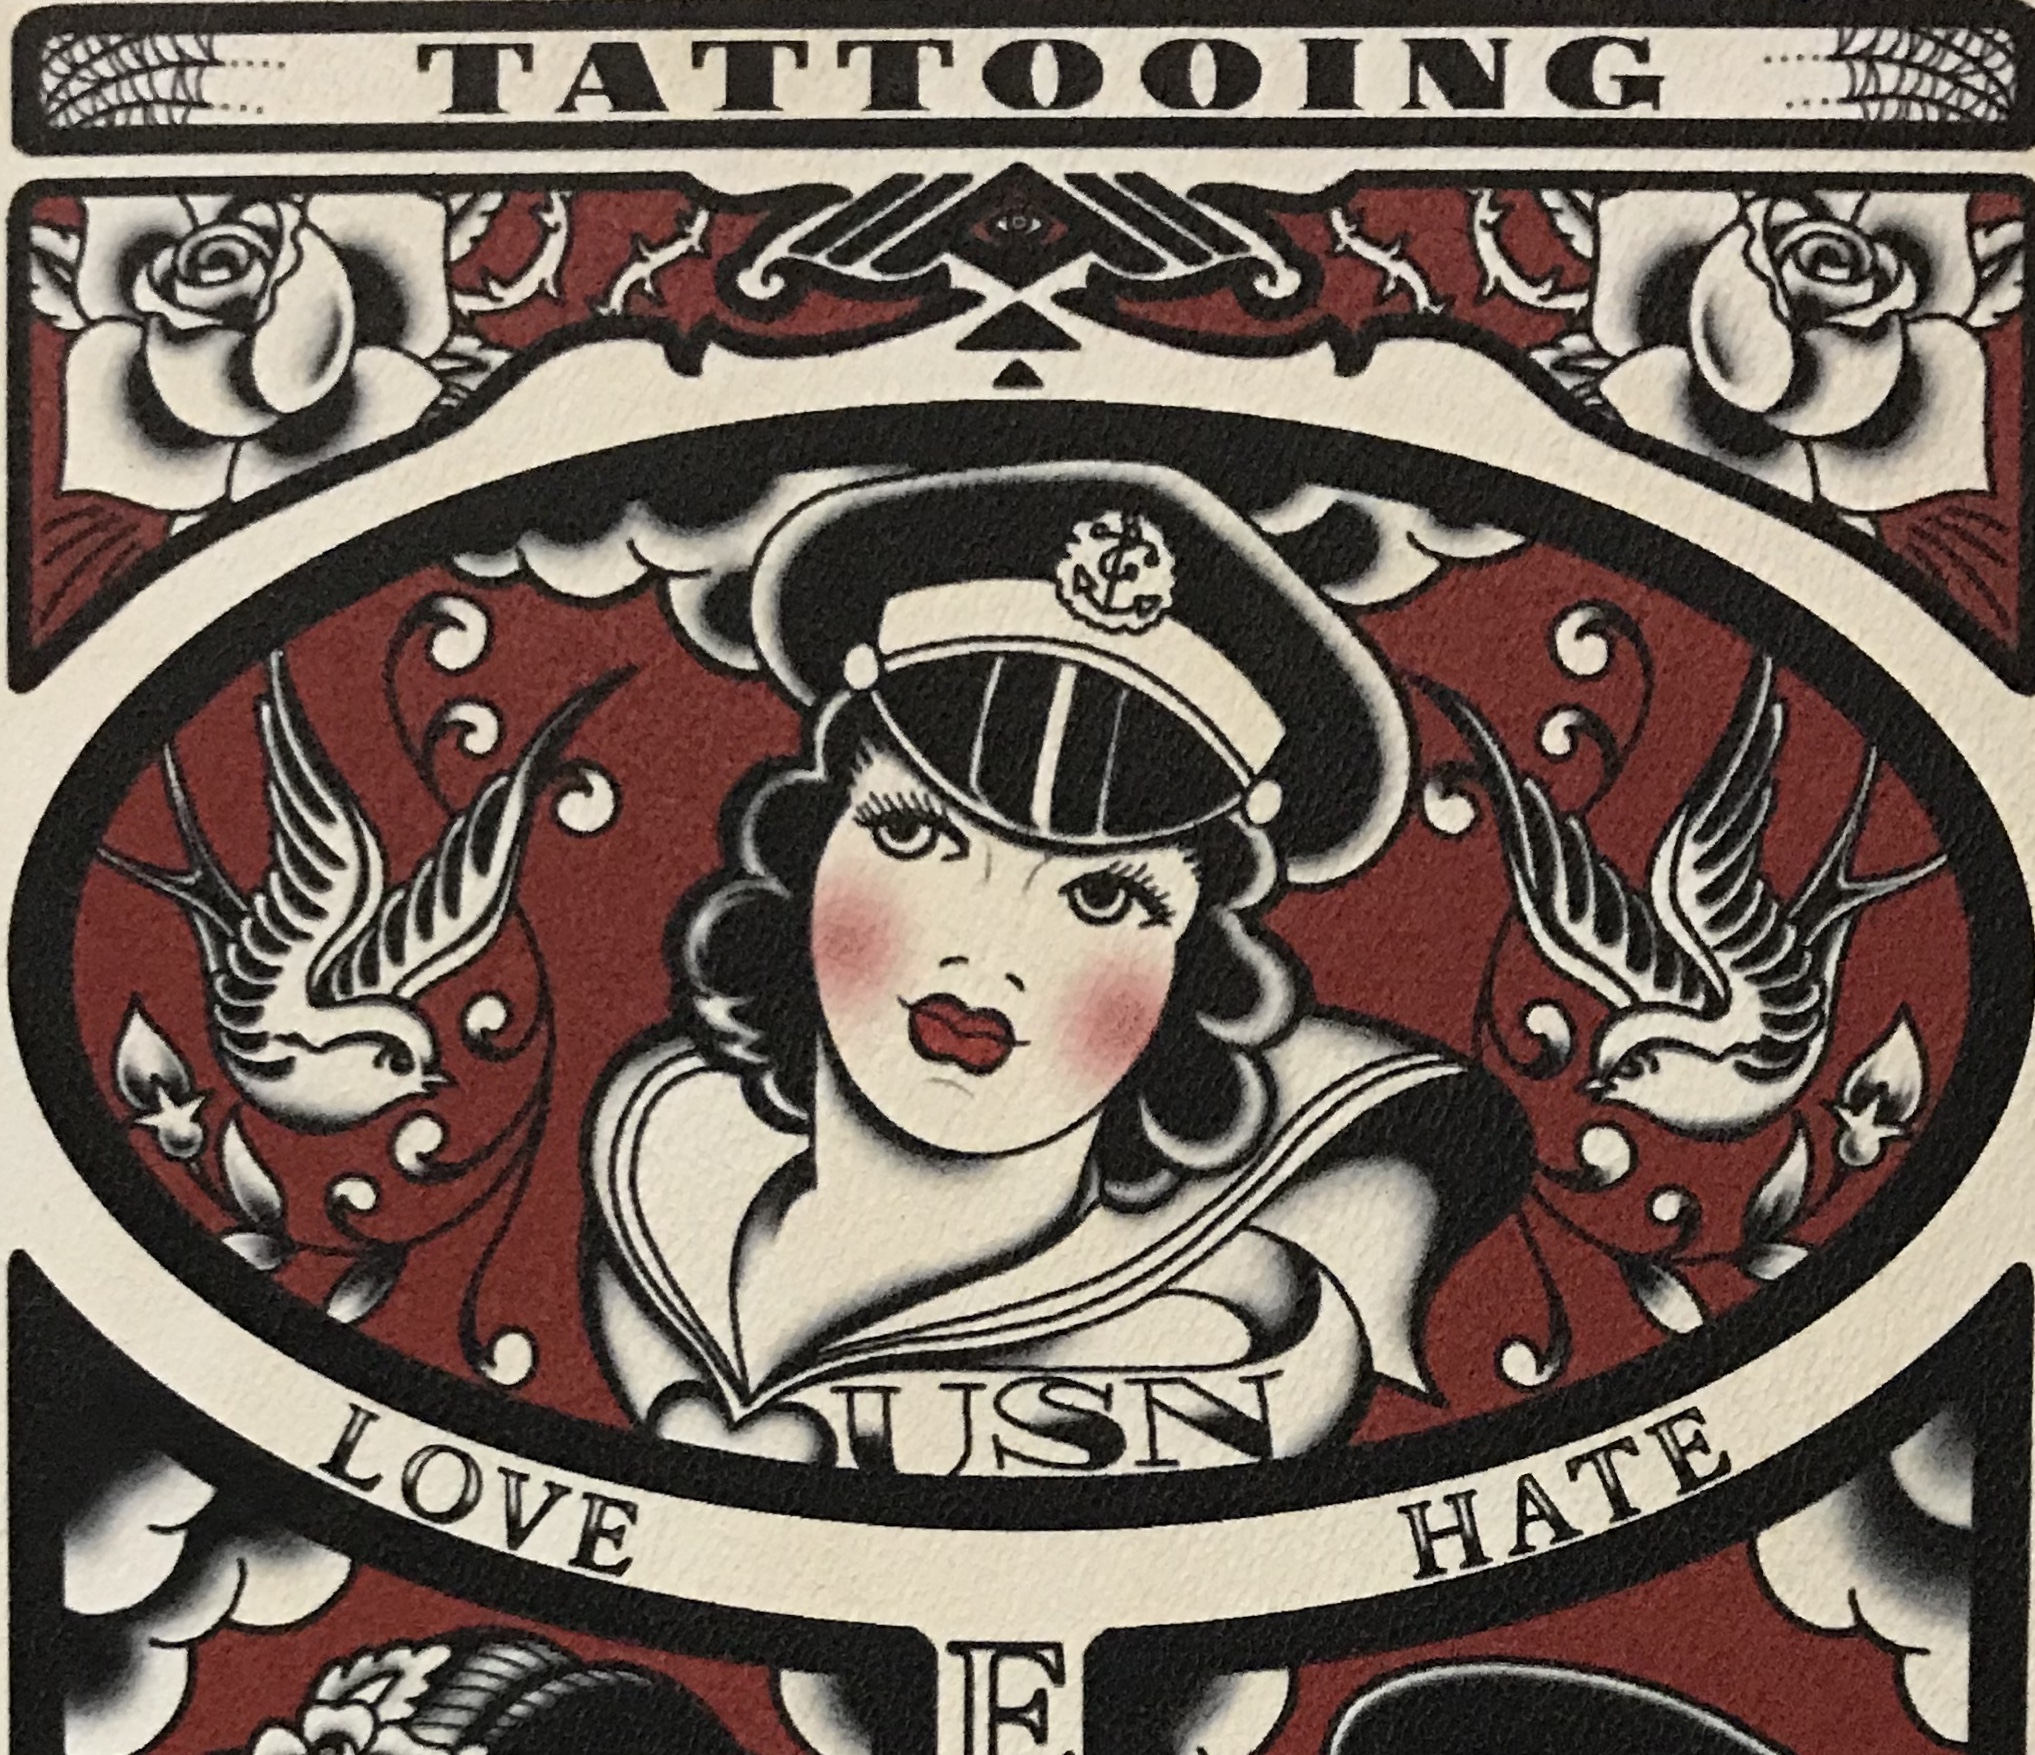 Tattoo タトゥー デザイン トラッド ピンナップガール 黒フレーム Iichi ハンドメイド クラフト作品 手仕事品の通販